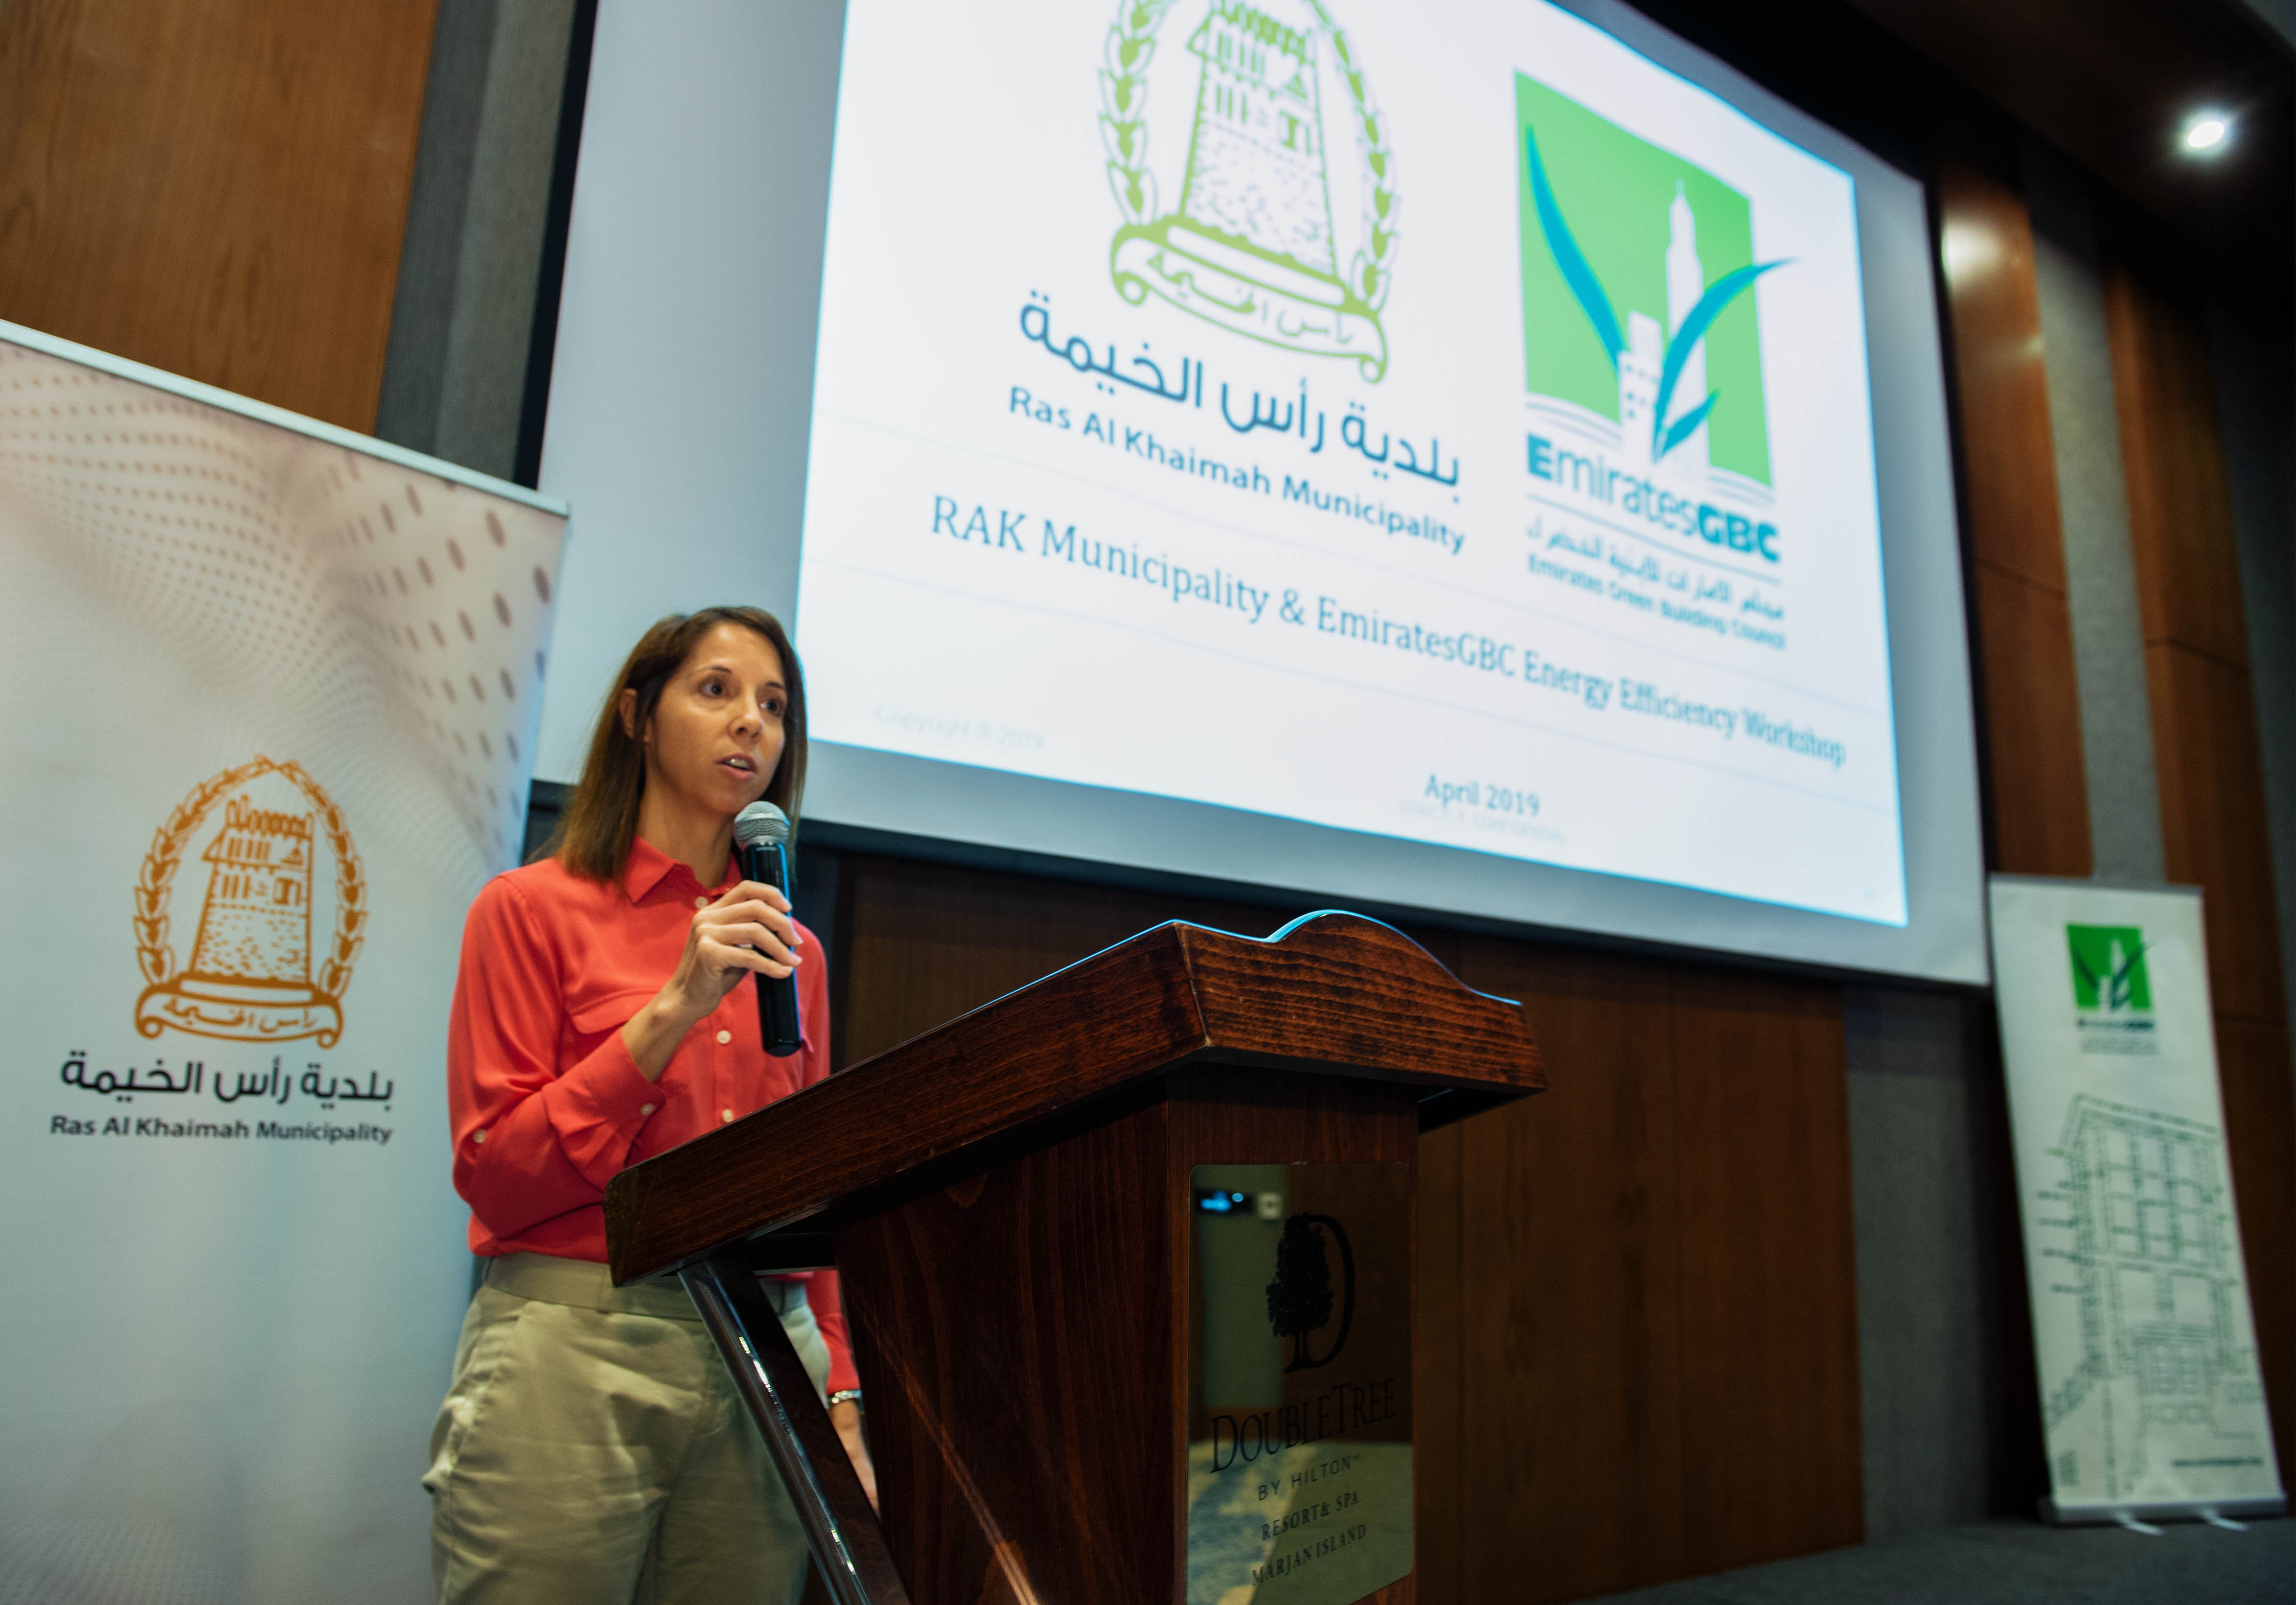 Ras Al Khaimah Municipality and EmiratesGBC Workshop